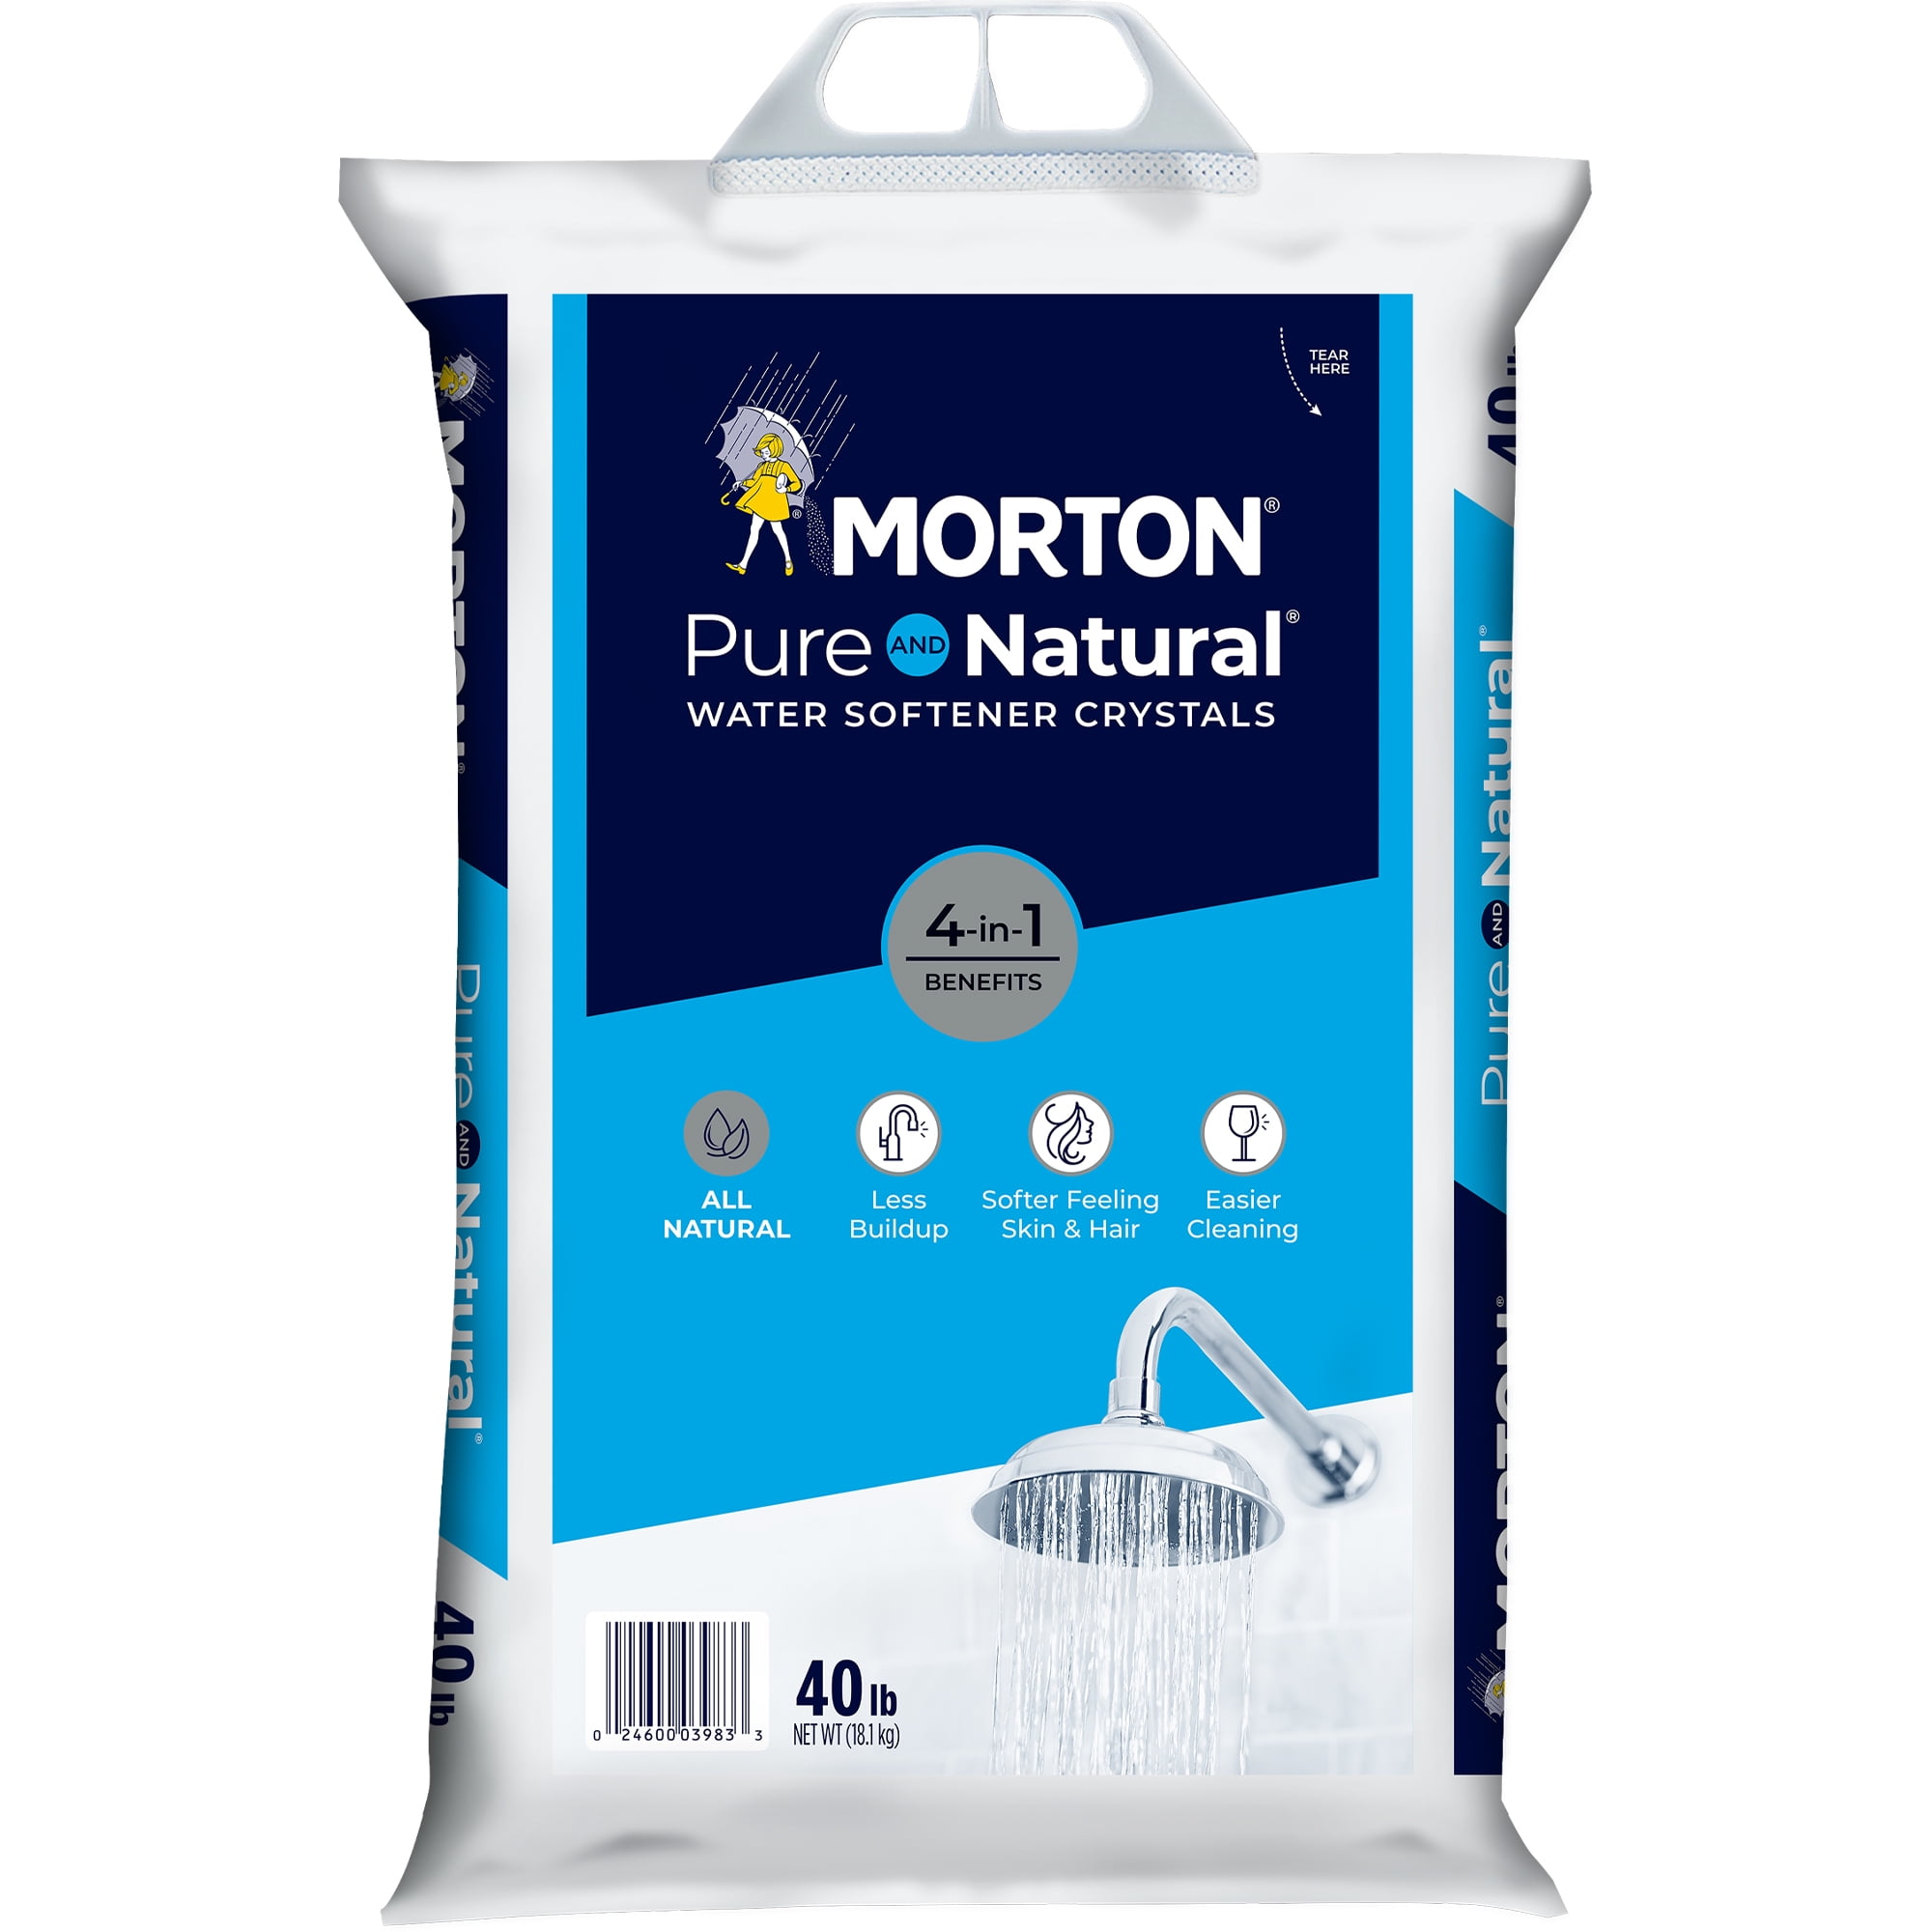 Morton water softener parts